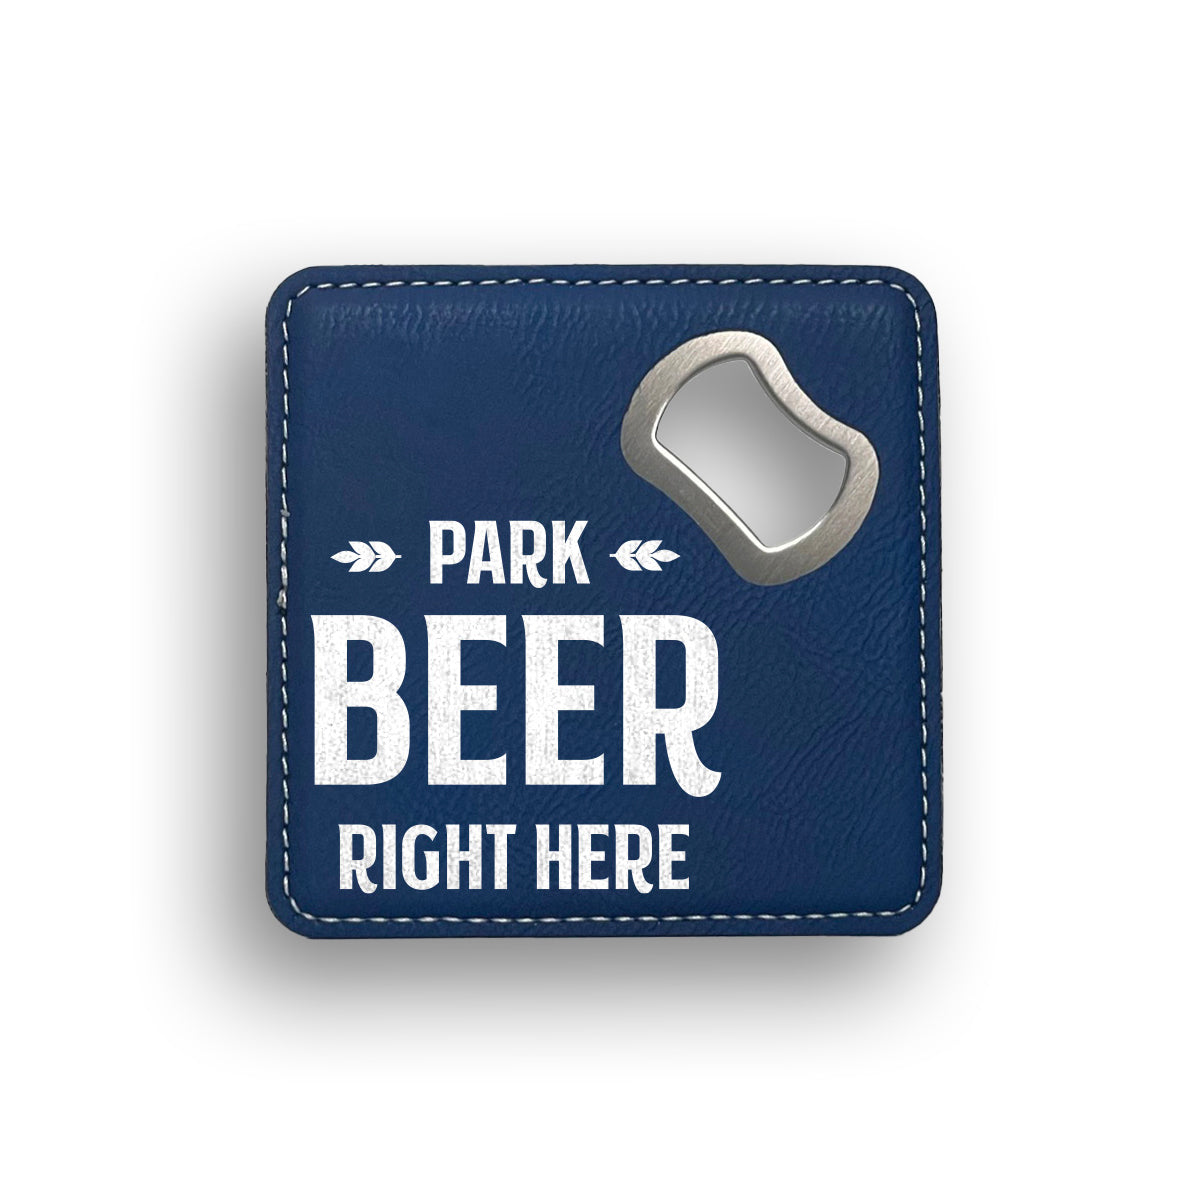 Park Beer Right Here Bottle Opener Coaster